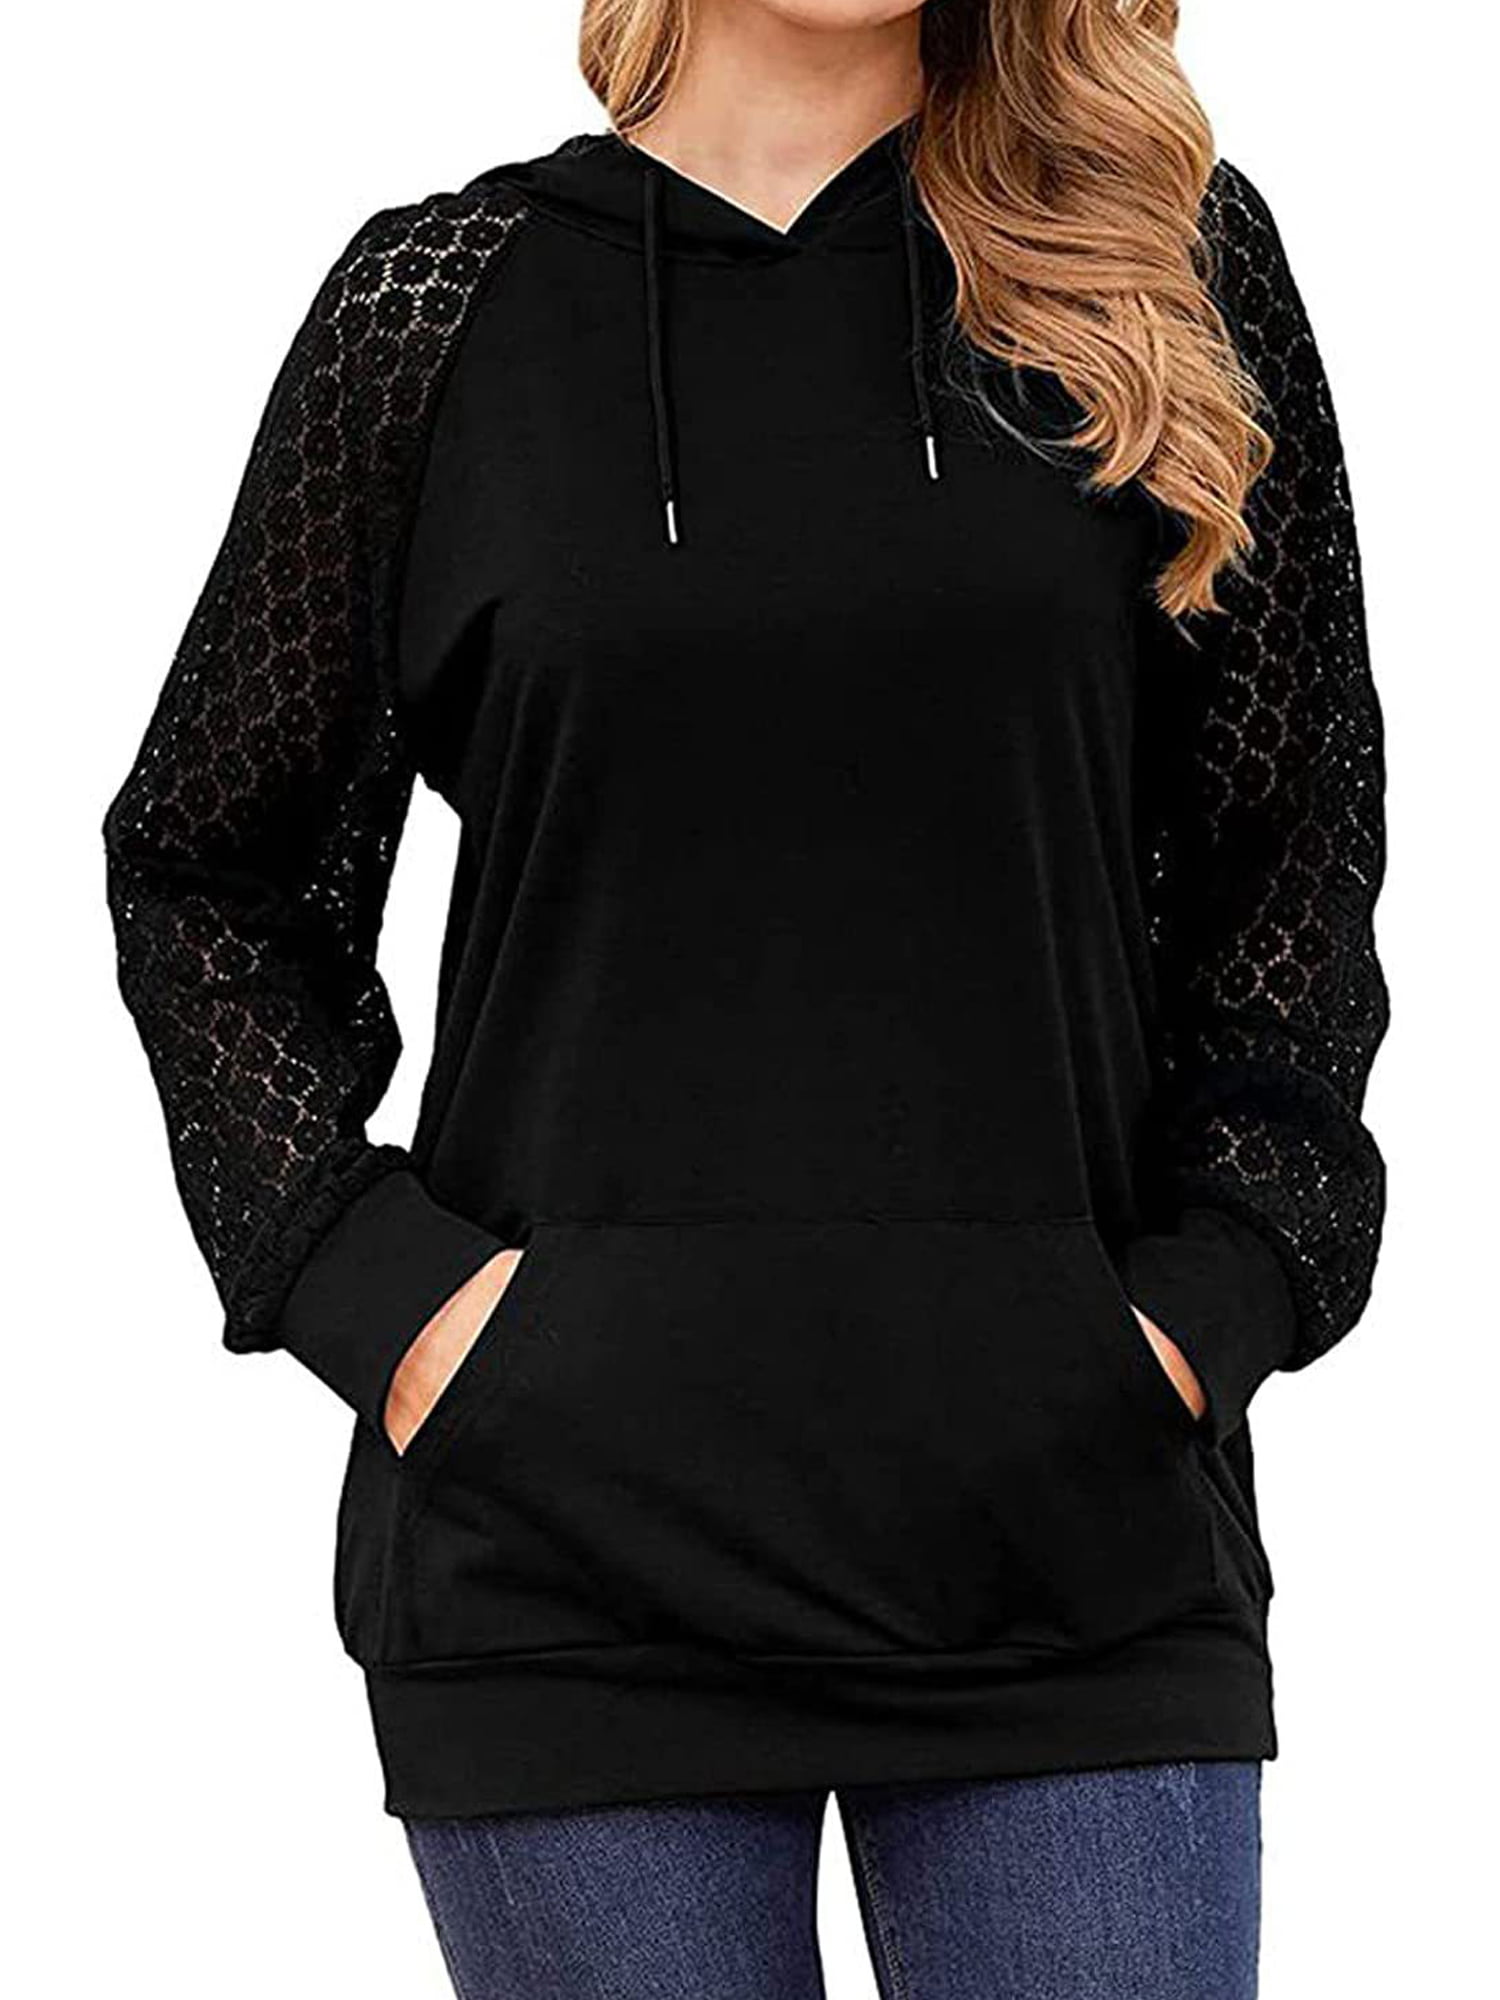 Romacci Womens Cowl Neck Sweatshirt Drawstring Long Sleeve Casual Pullover Top 